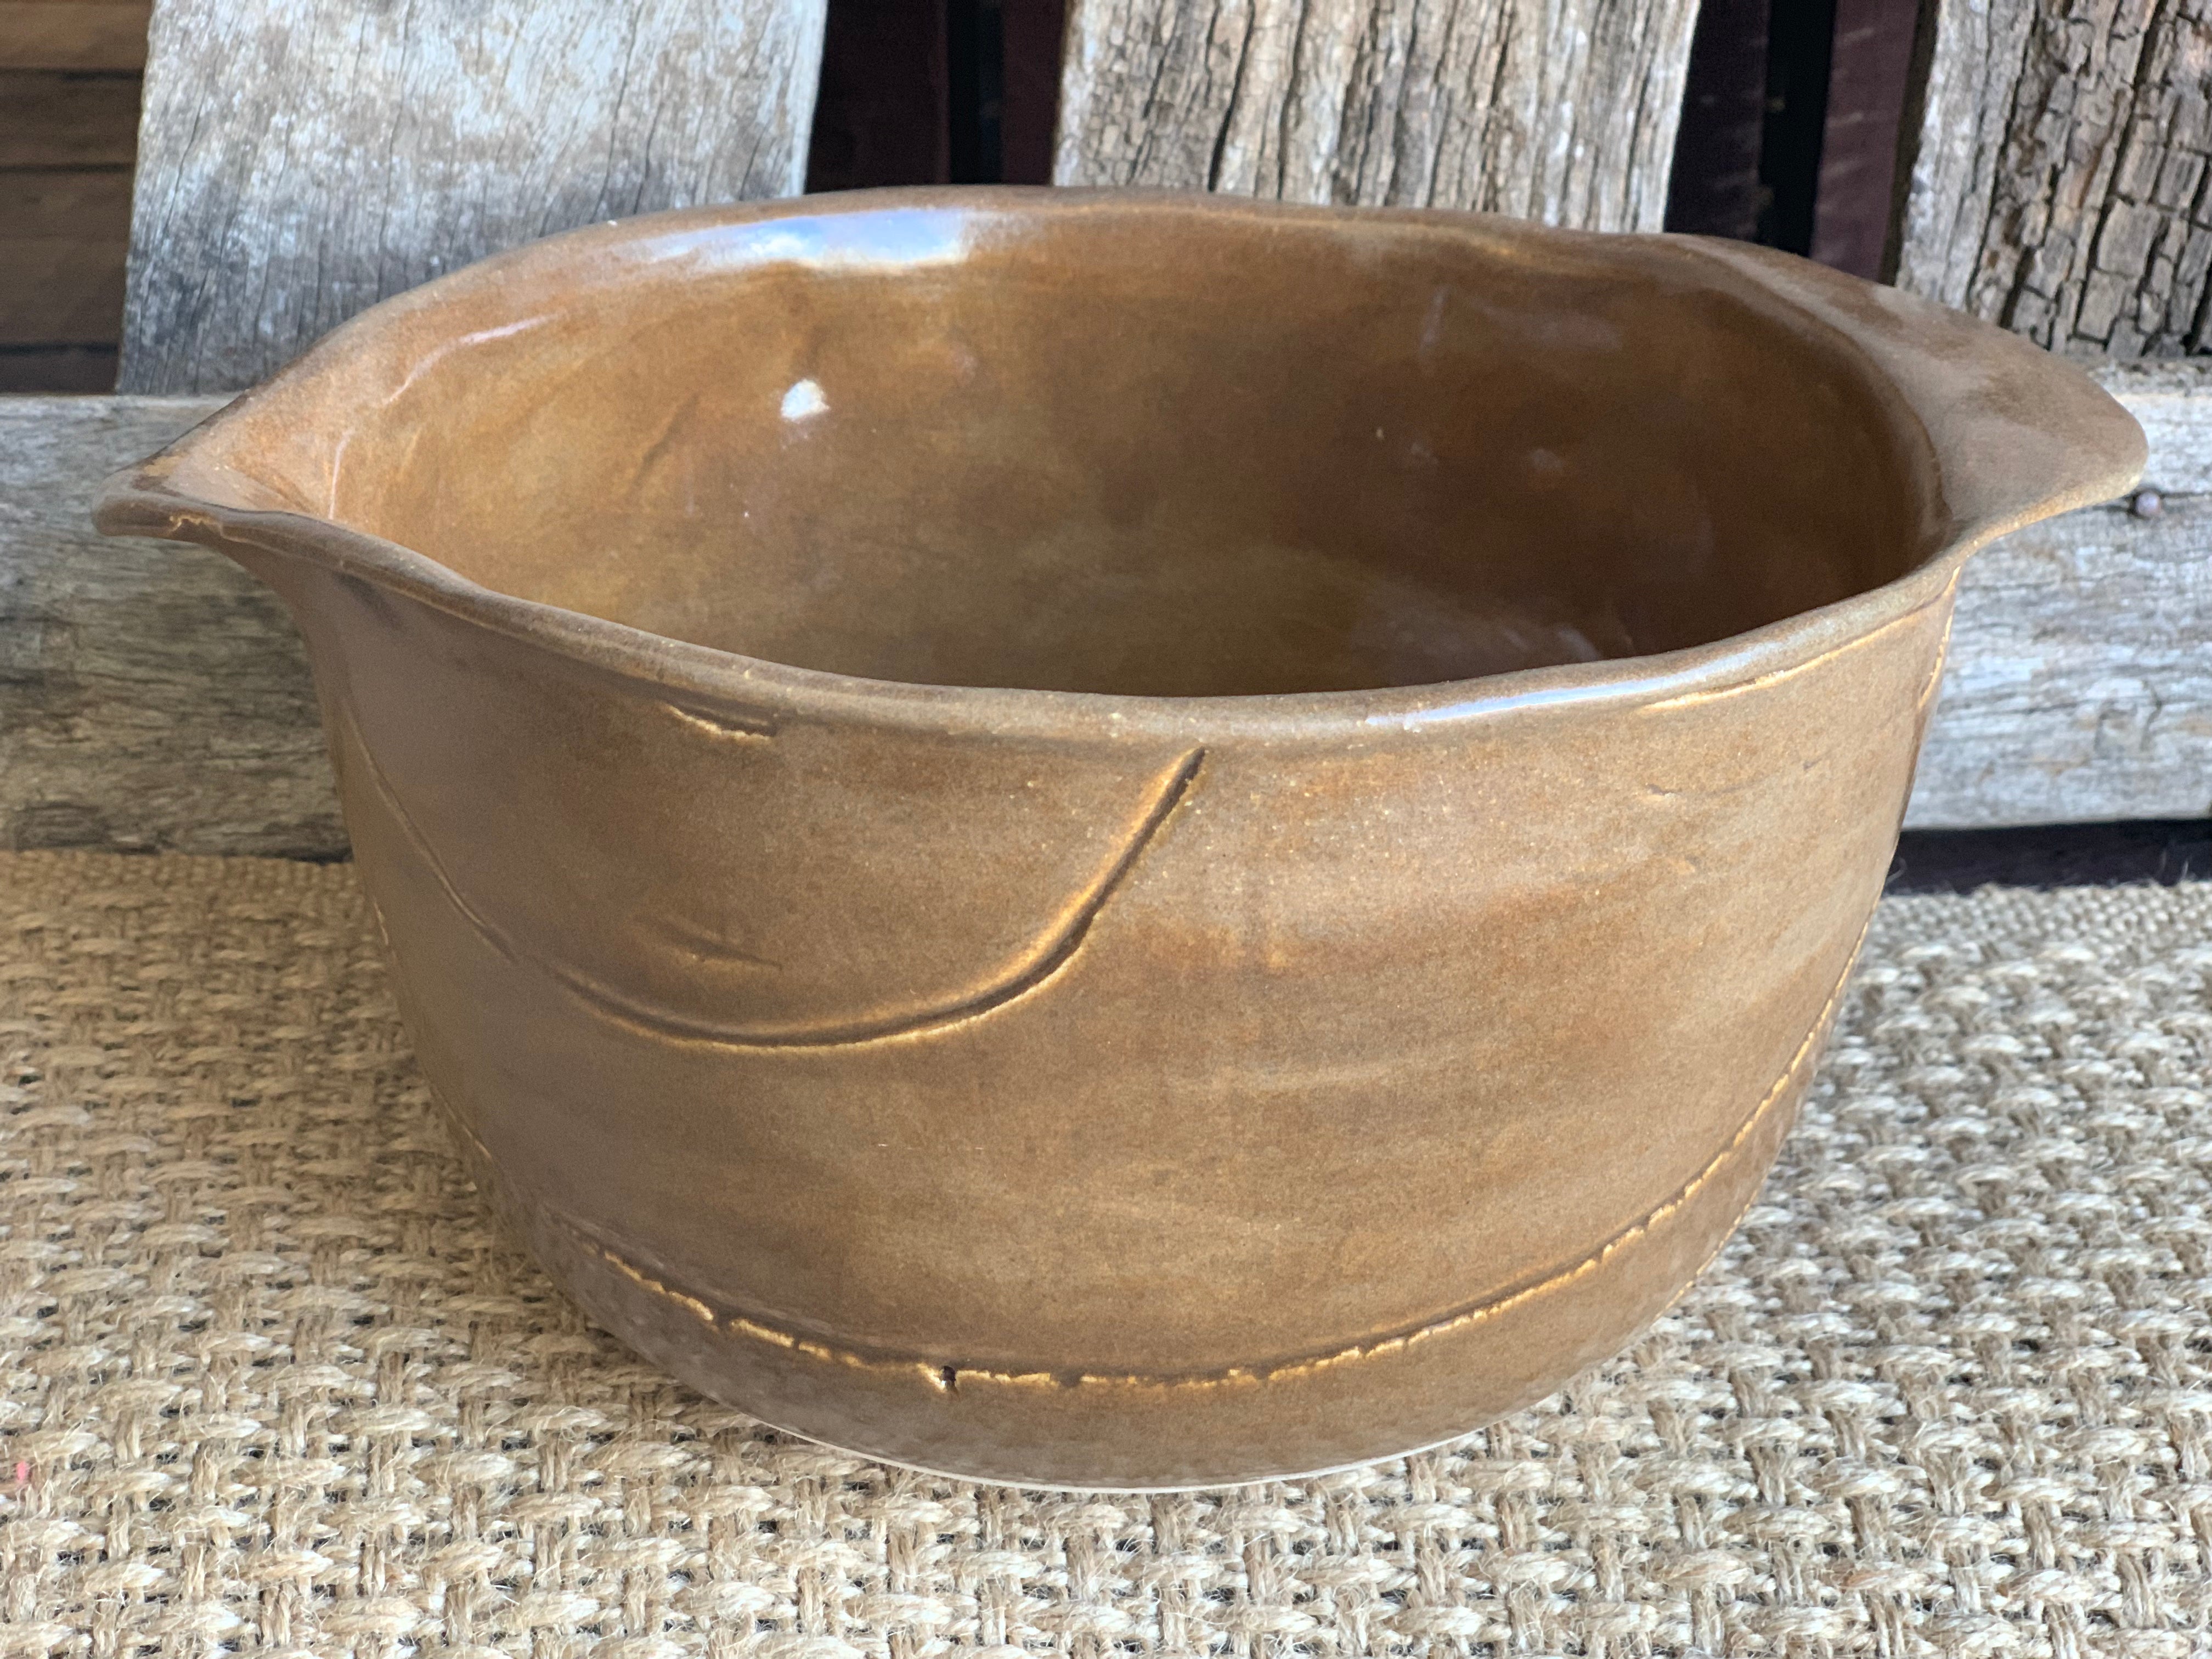 NEW Unique Handmade Mixing Bowl